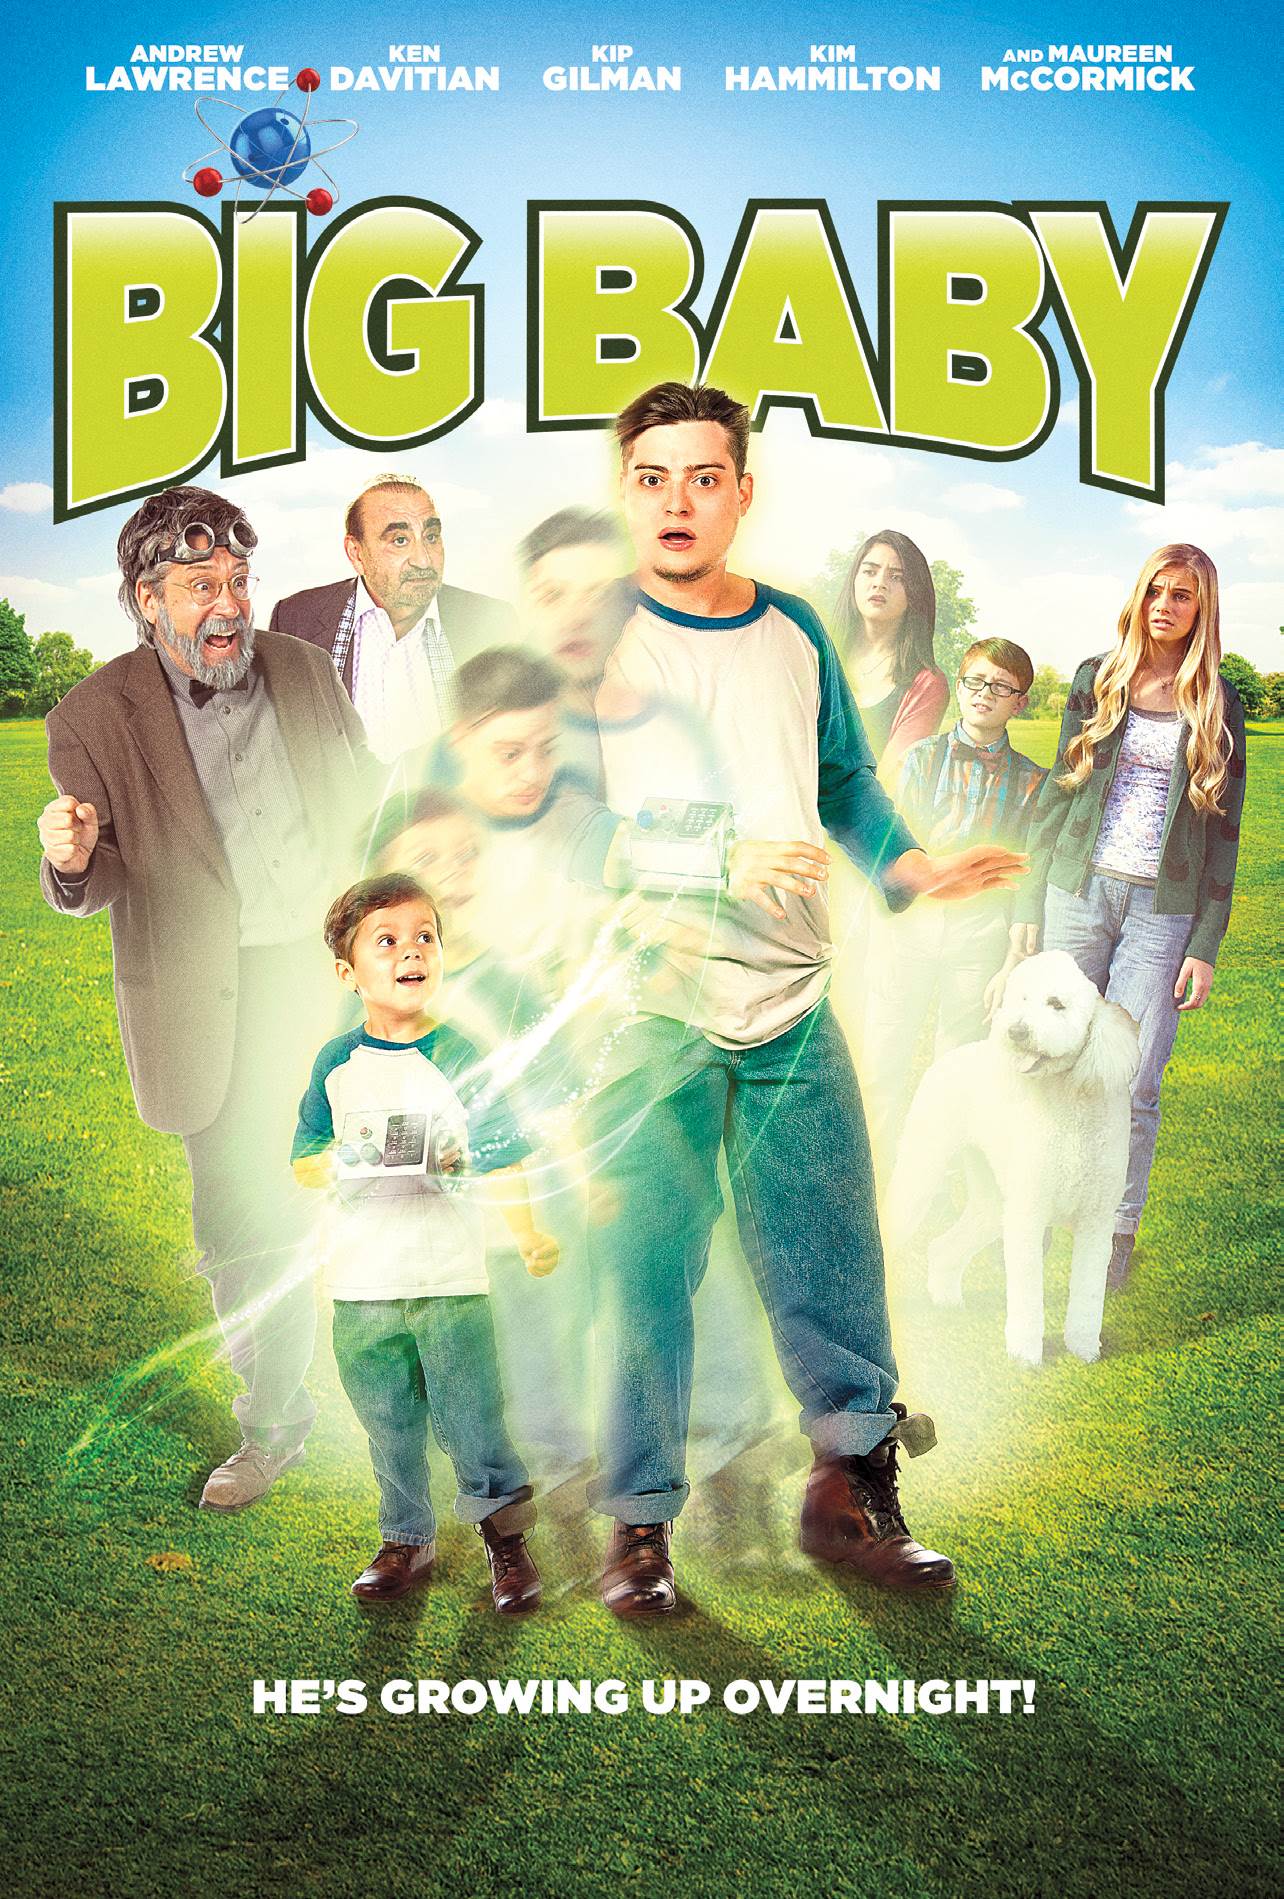 Big Baby (2015) Ken Davitian